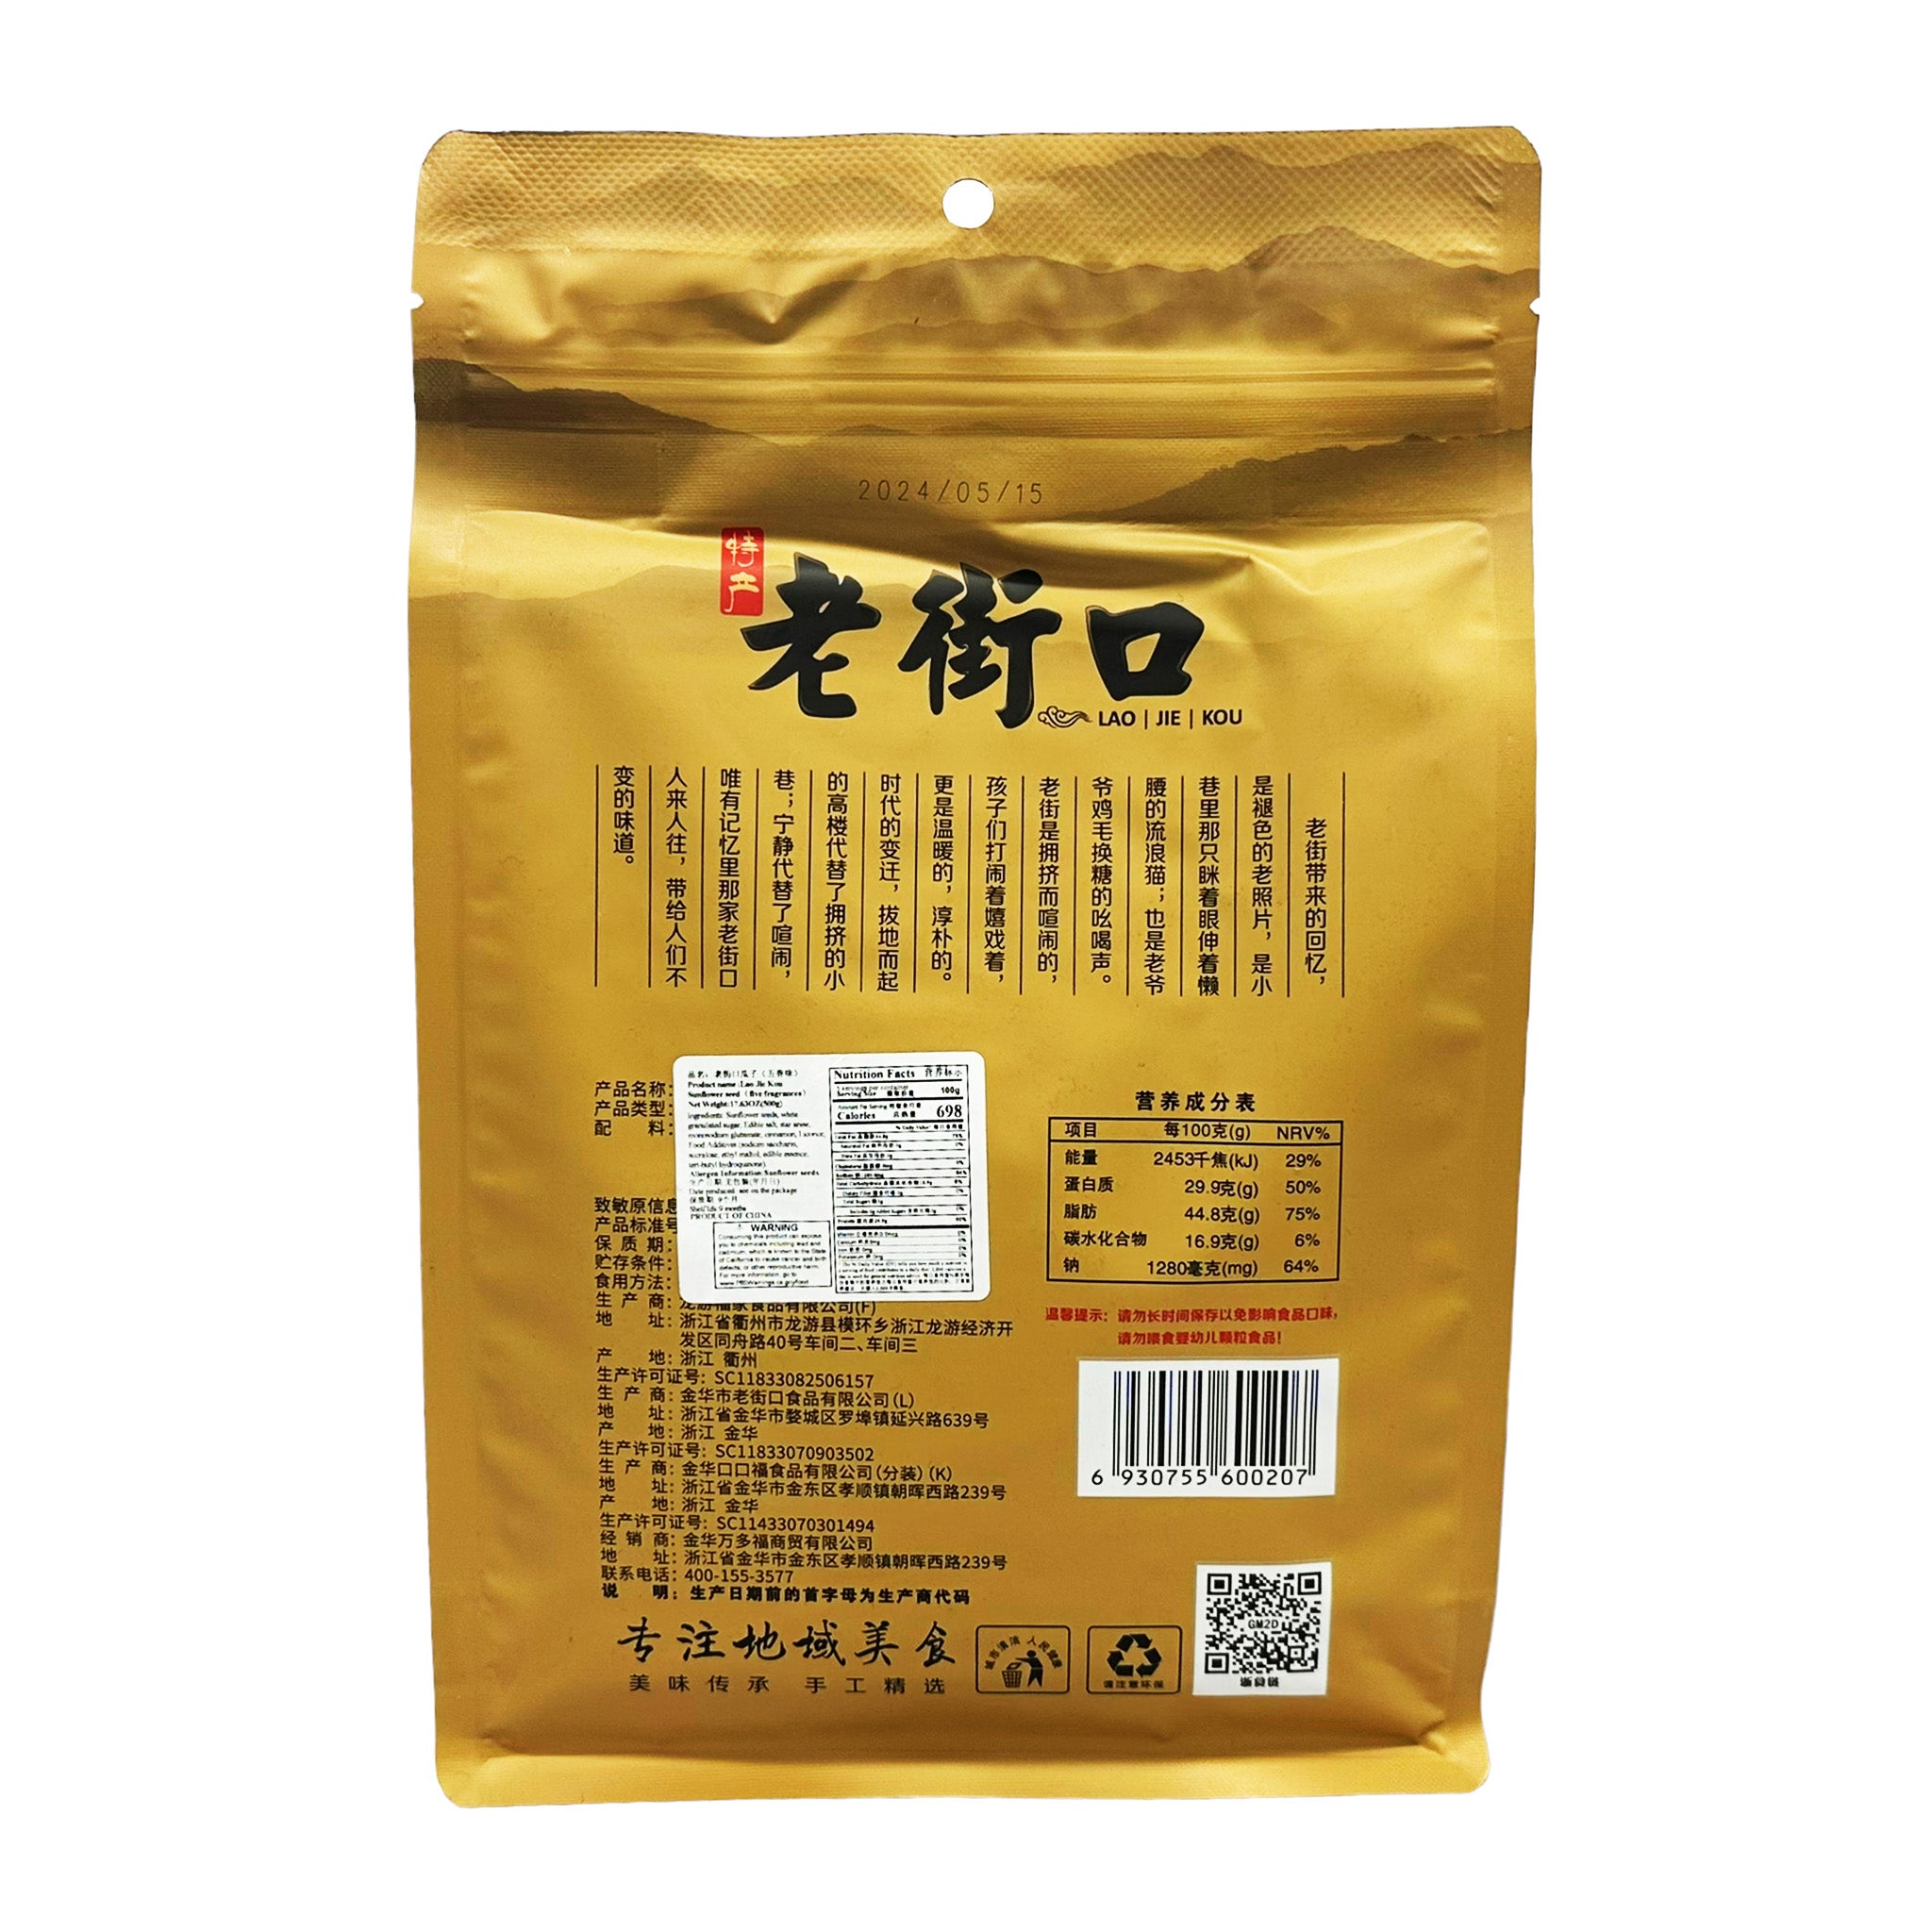 We make buying your favorite Lao Jie Kou Sunflower Seed - Five 